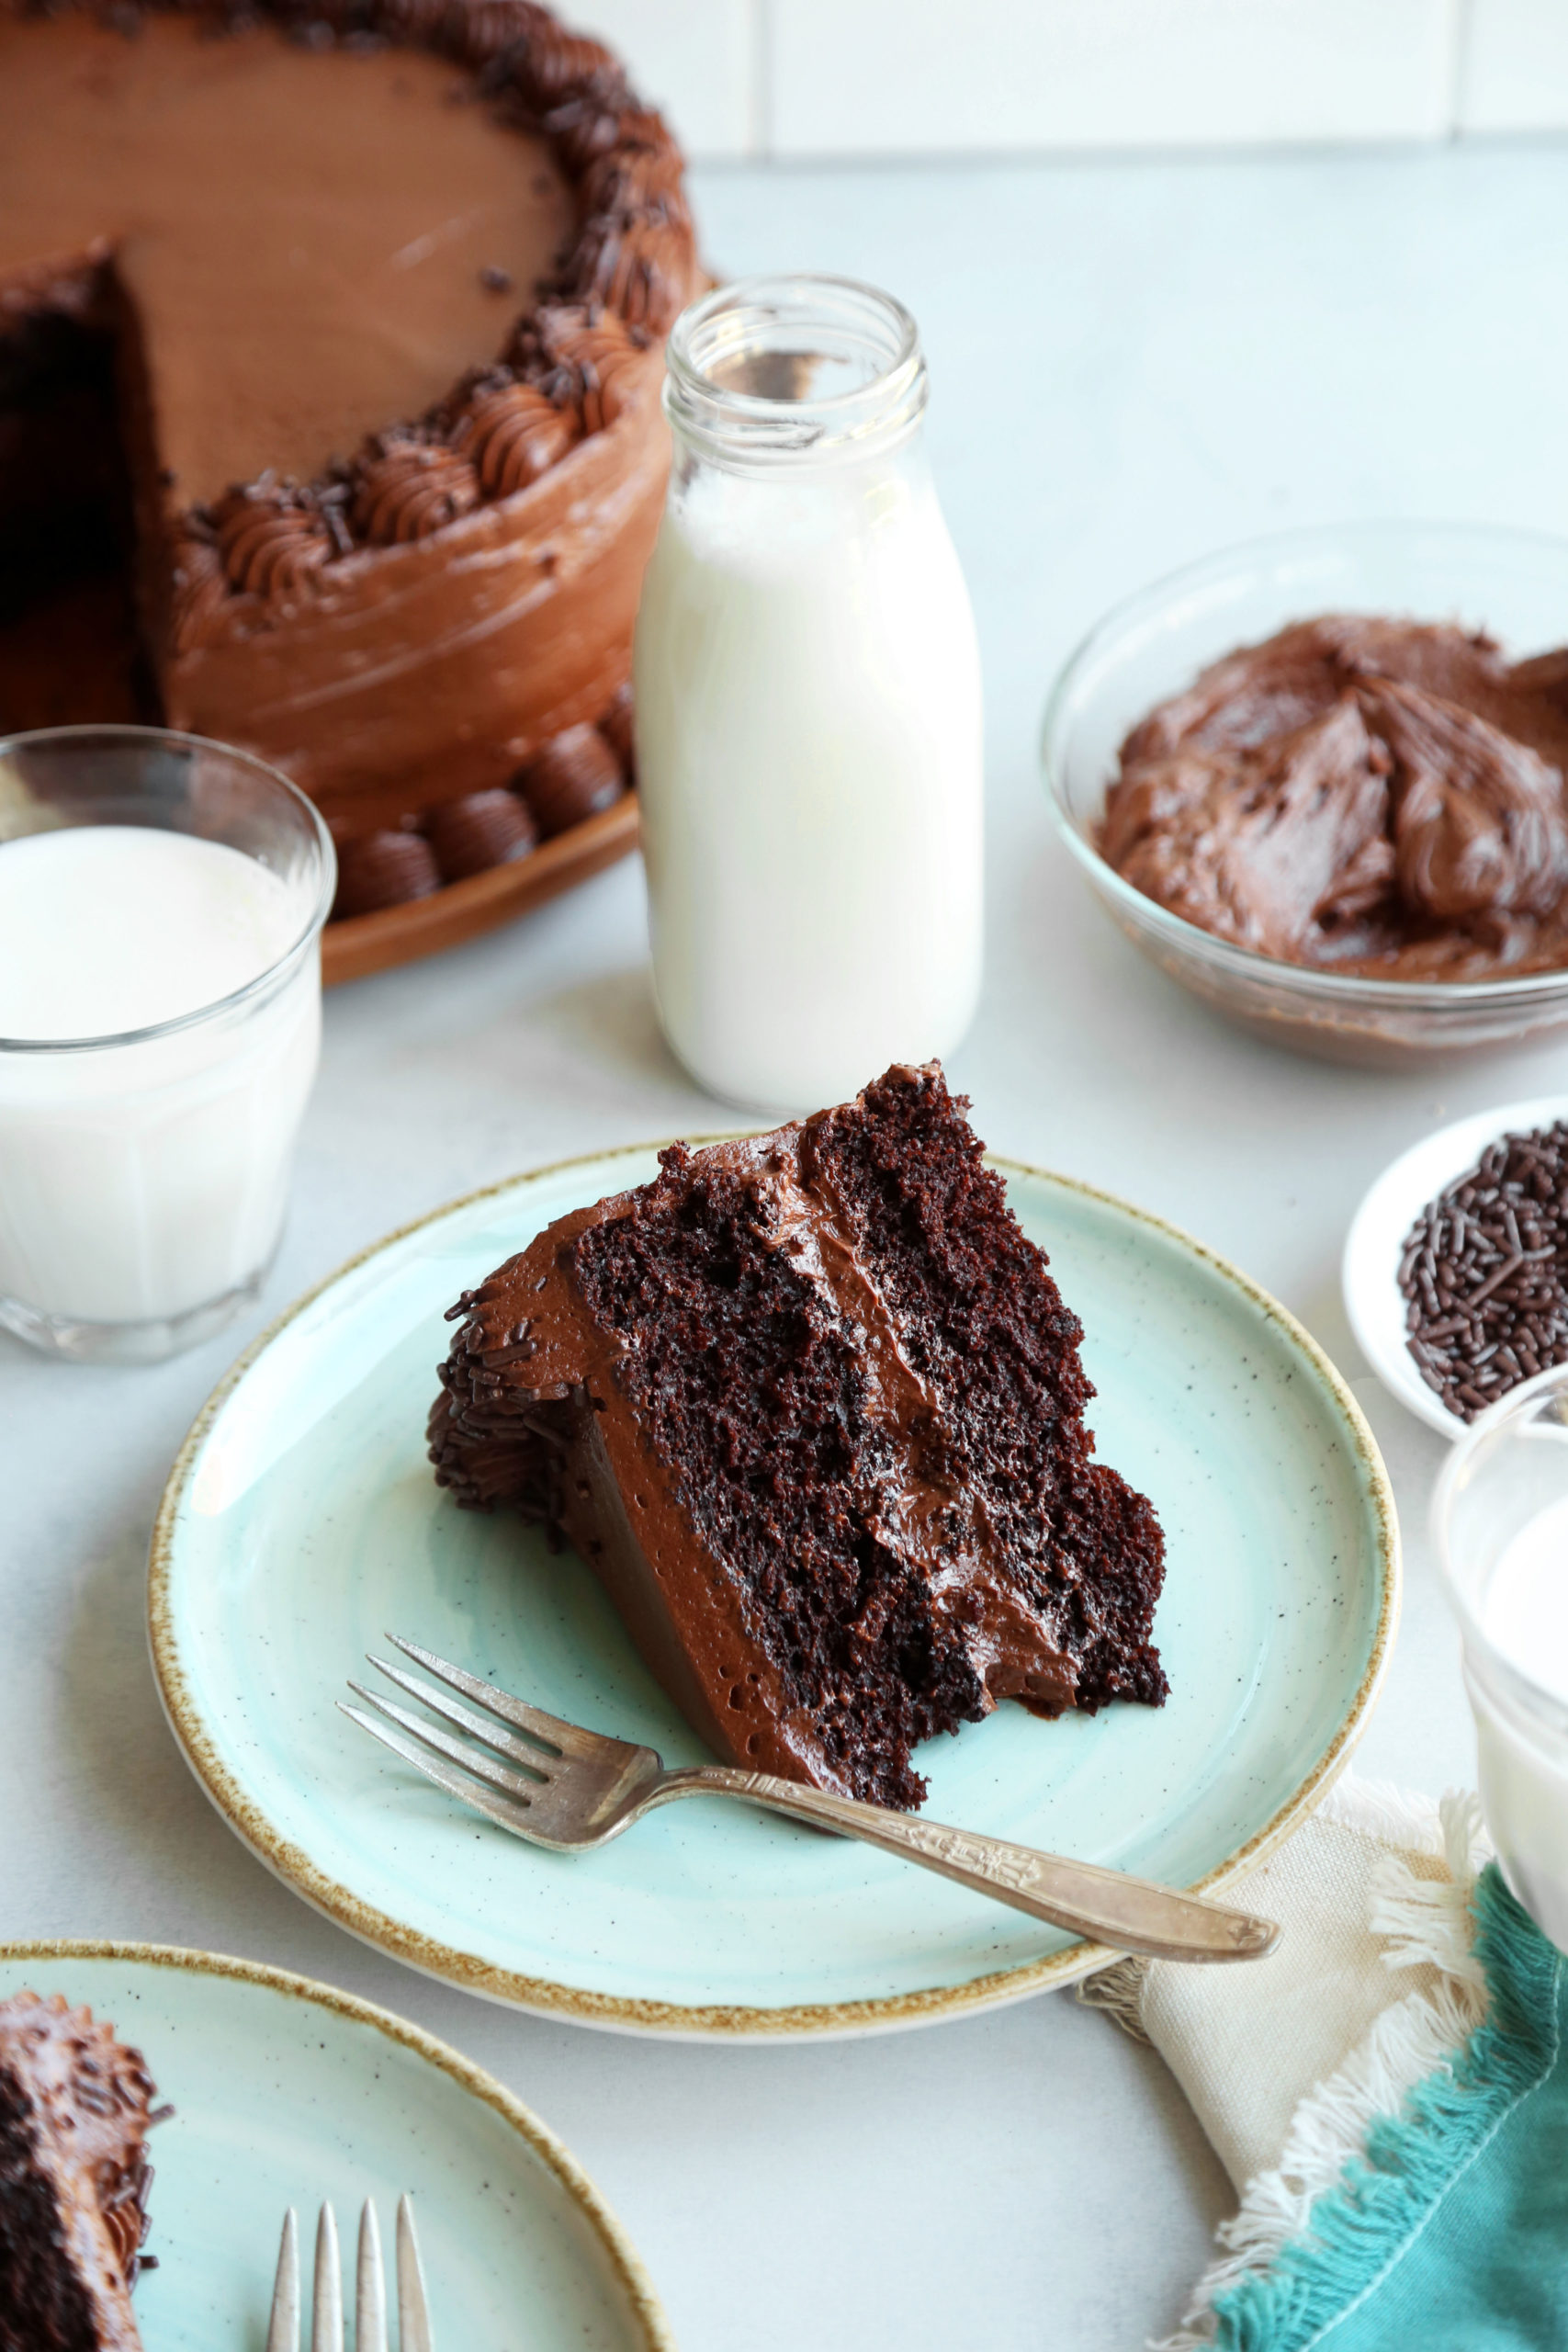 My 12 Best Birthday Cake Recipes - Joy the Baker